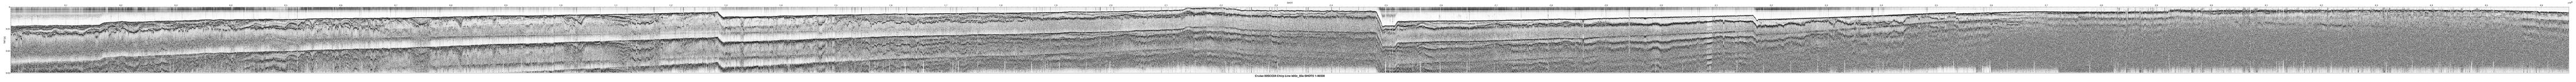 00SCC04 b00c_93a seismic profile image